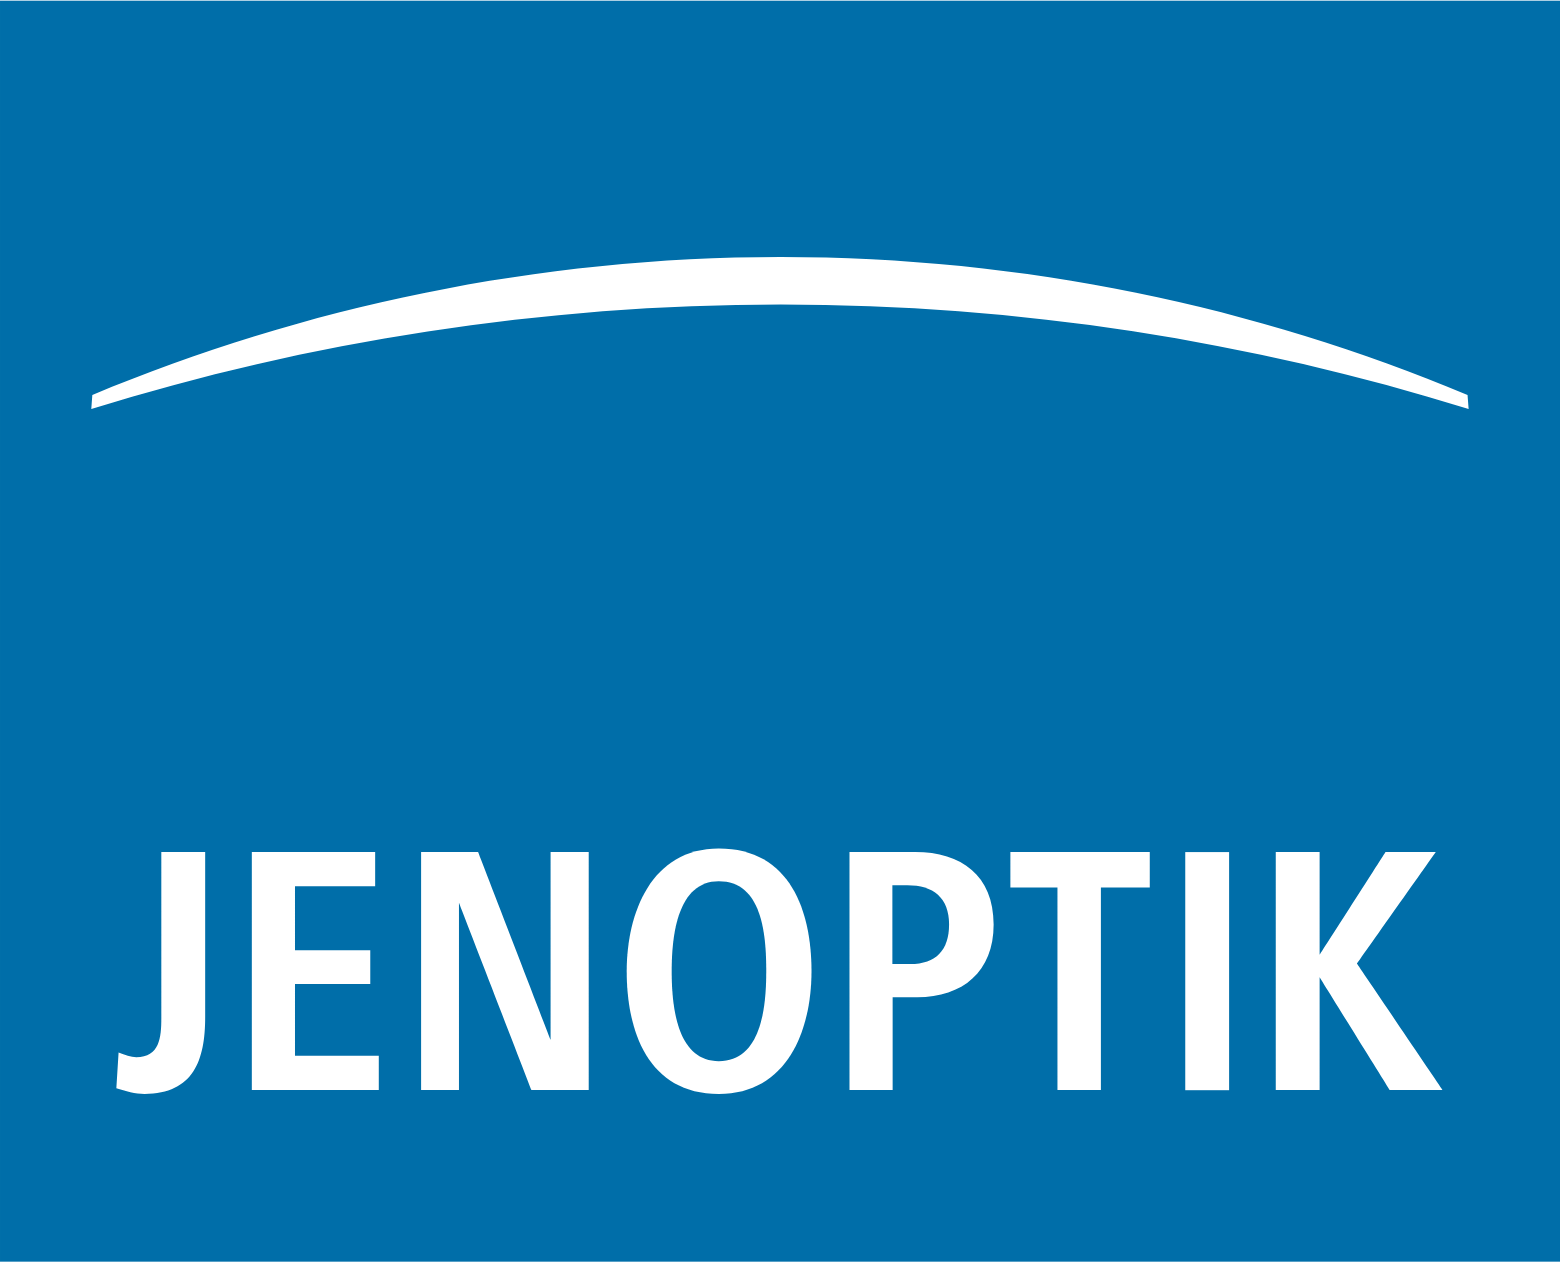 Jenoptik logo (PNG transparent)